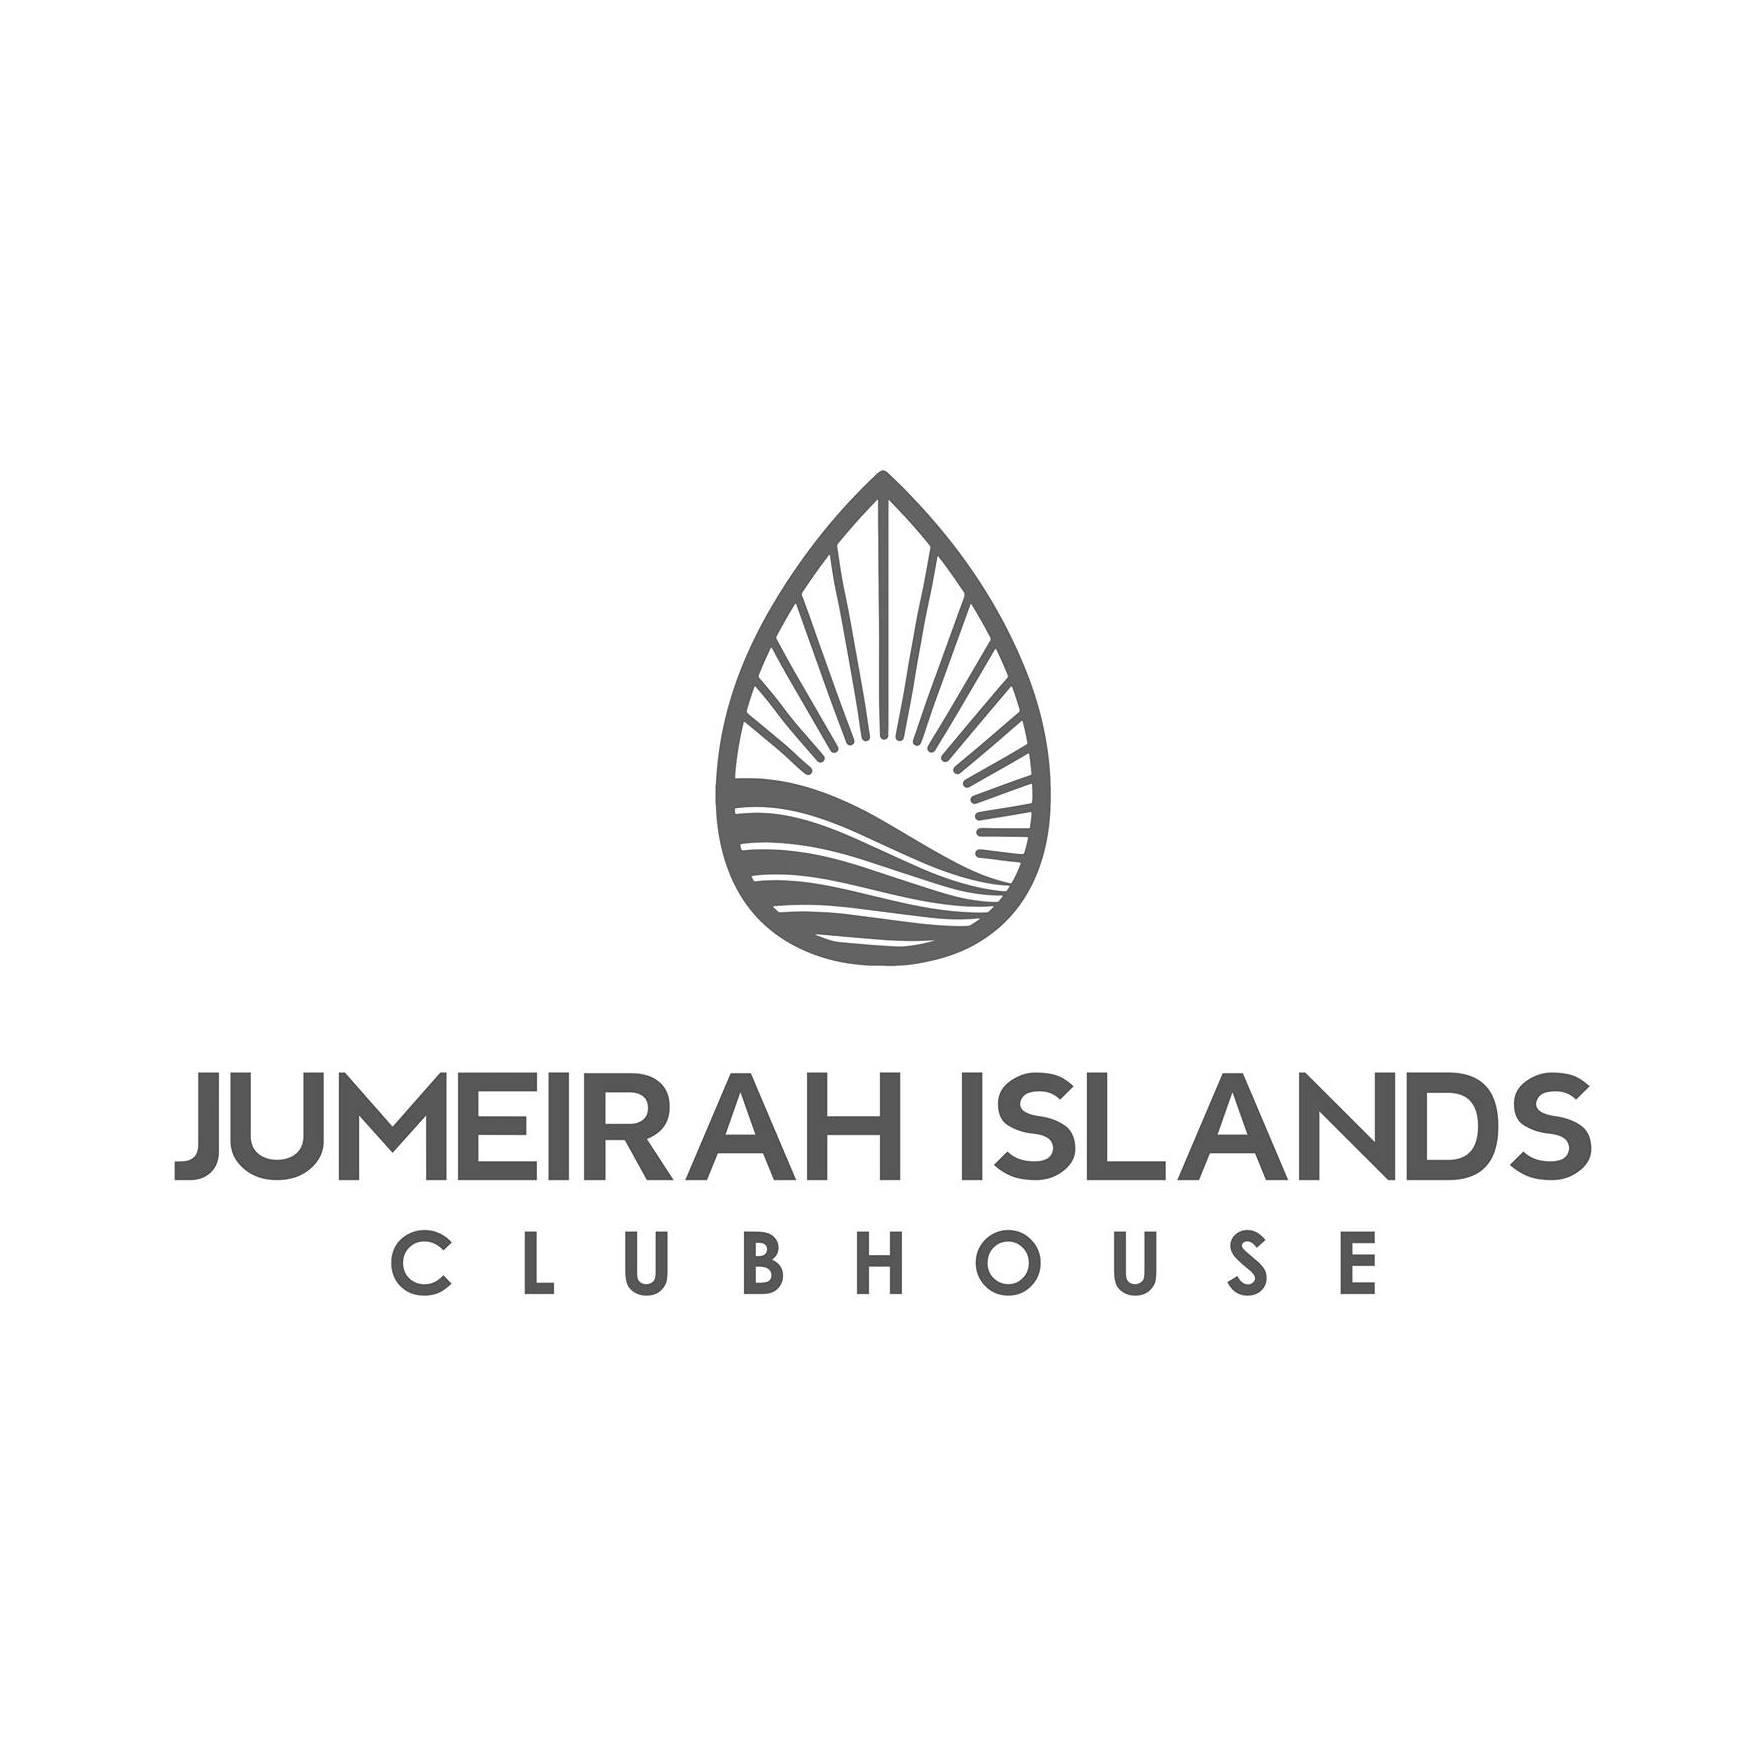 Jumeirah Islands Clubhouse